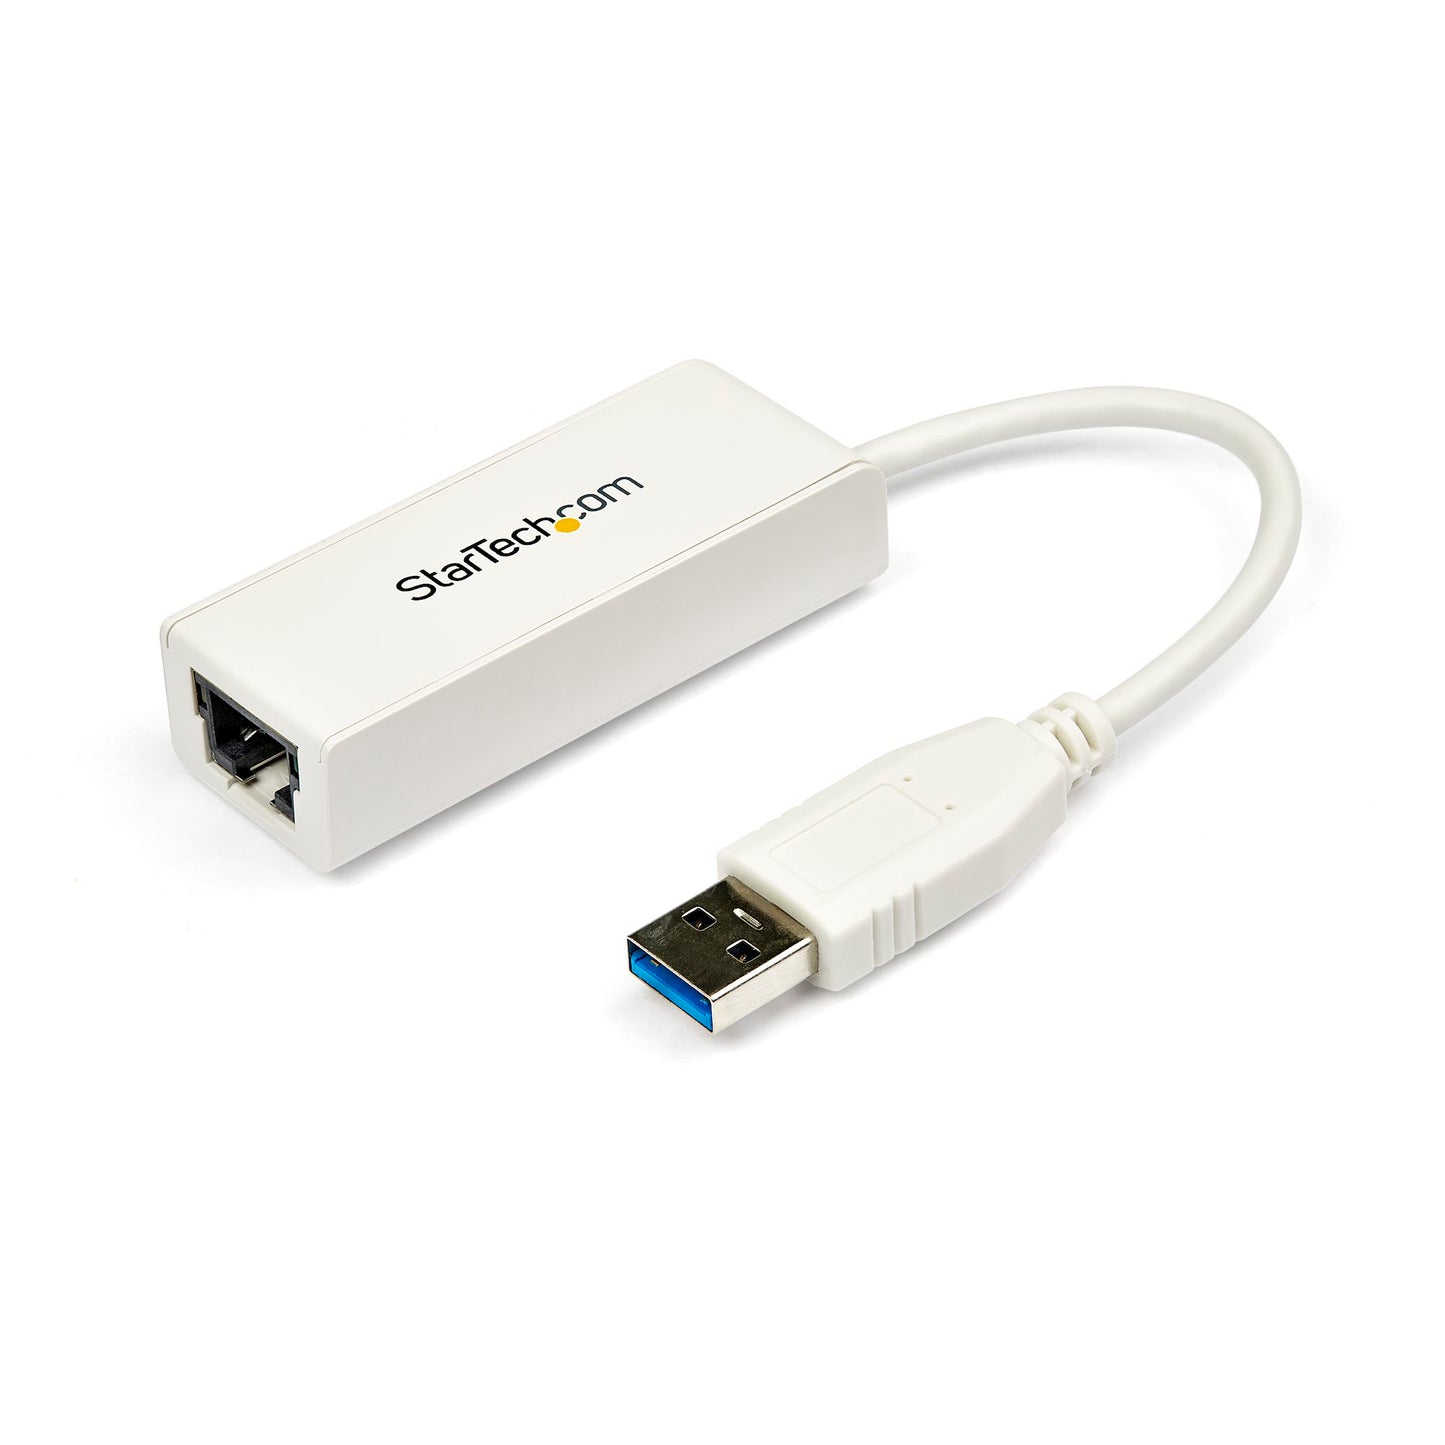 STARTECH USB 3.0 TO GIGABIT ETHERNET NIC NETWORK ADAPTER